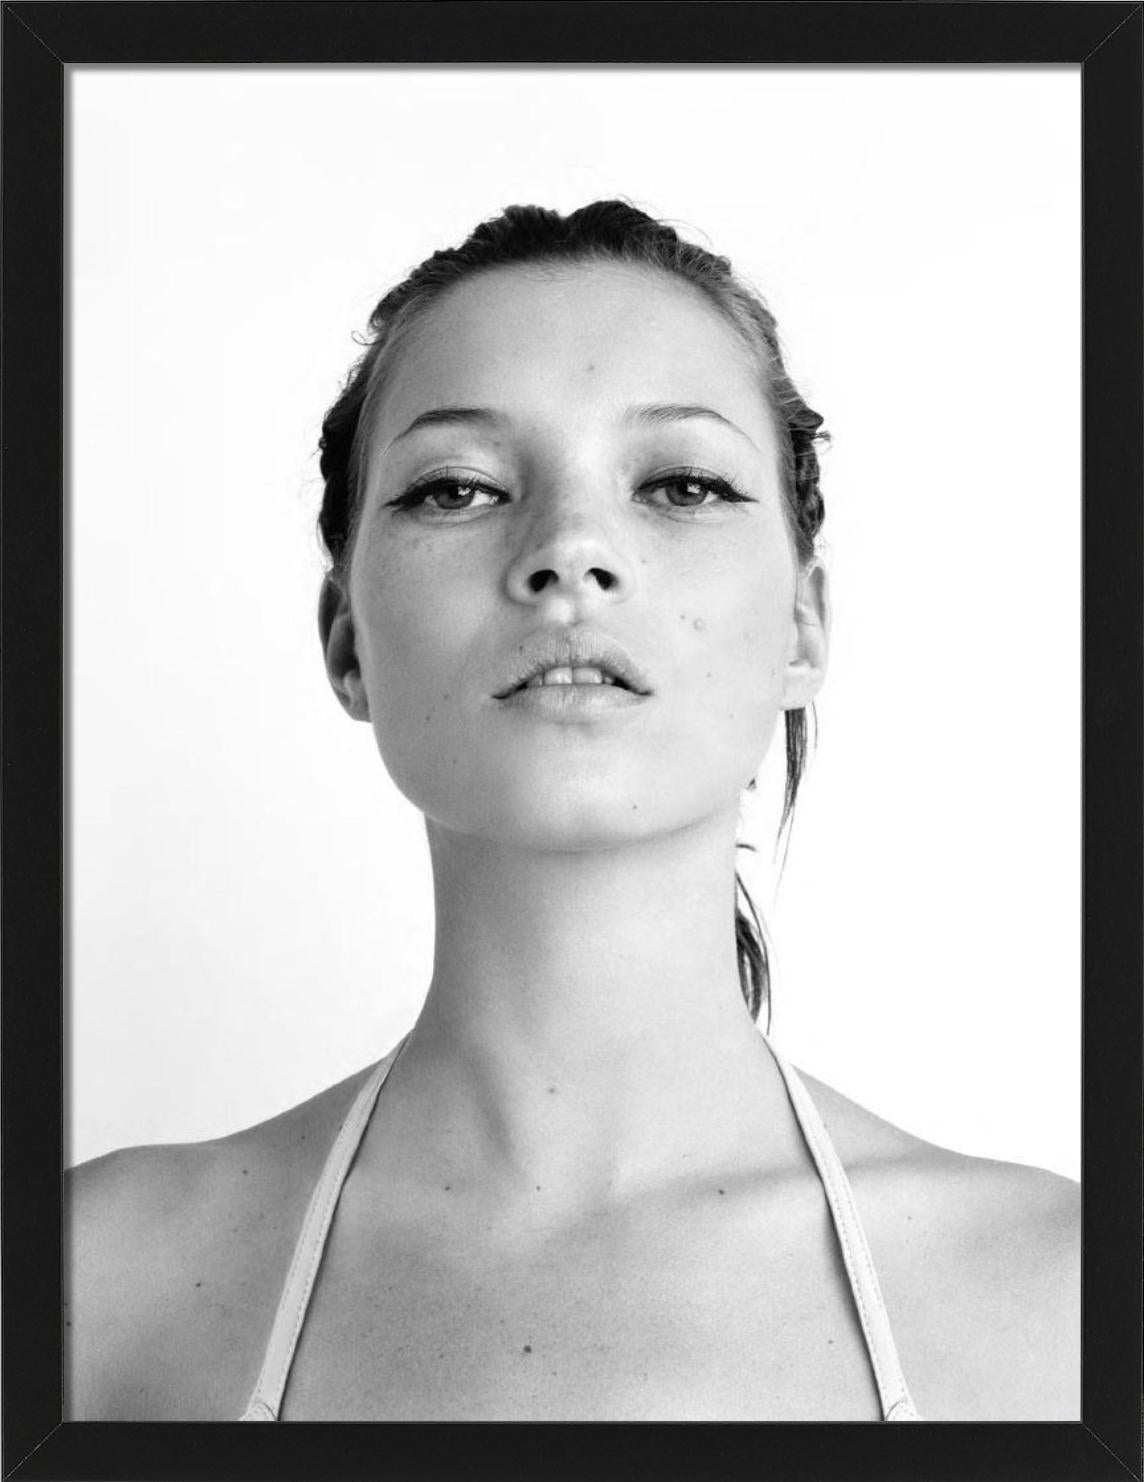 Kate's Look – Porträt der Supermodel Kate Moss, Kunstfotografie, 1998 (Grau), Black and White Photograph, von Rankin